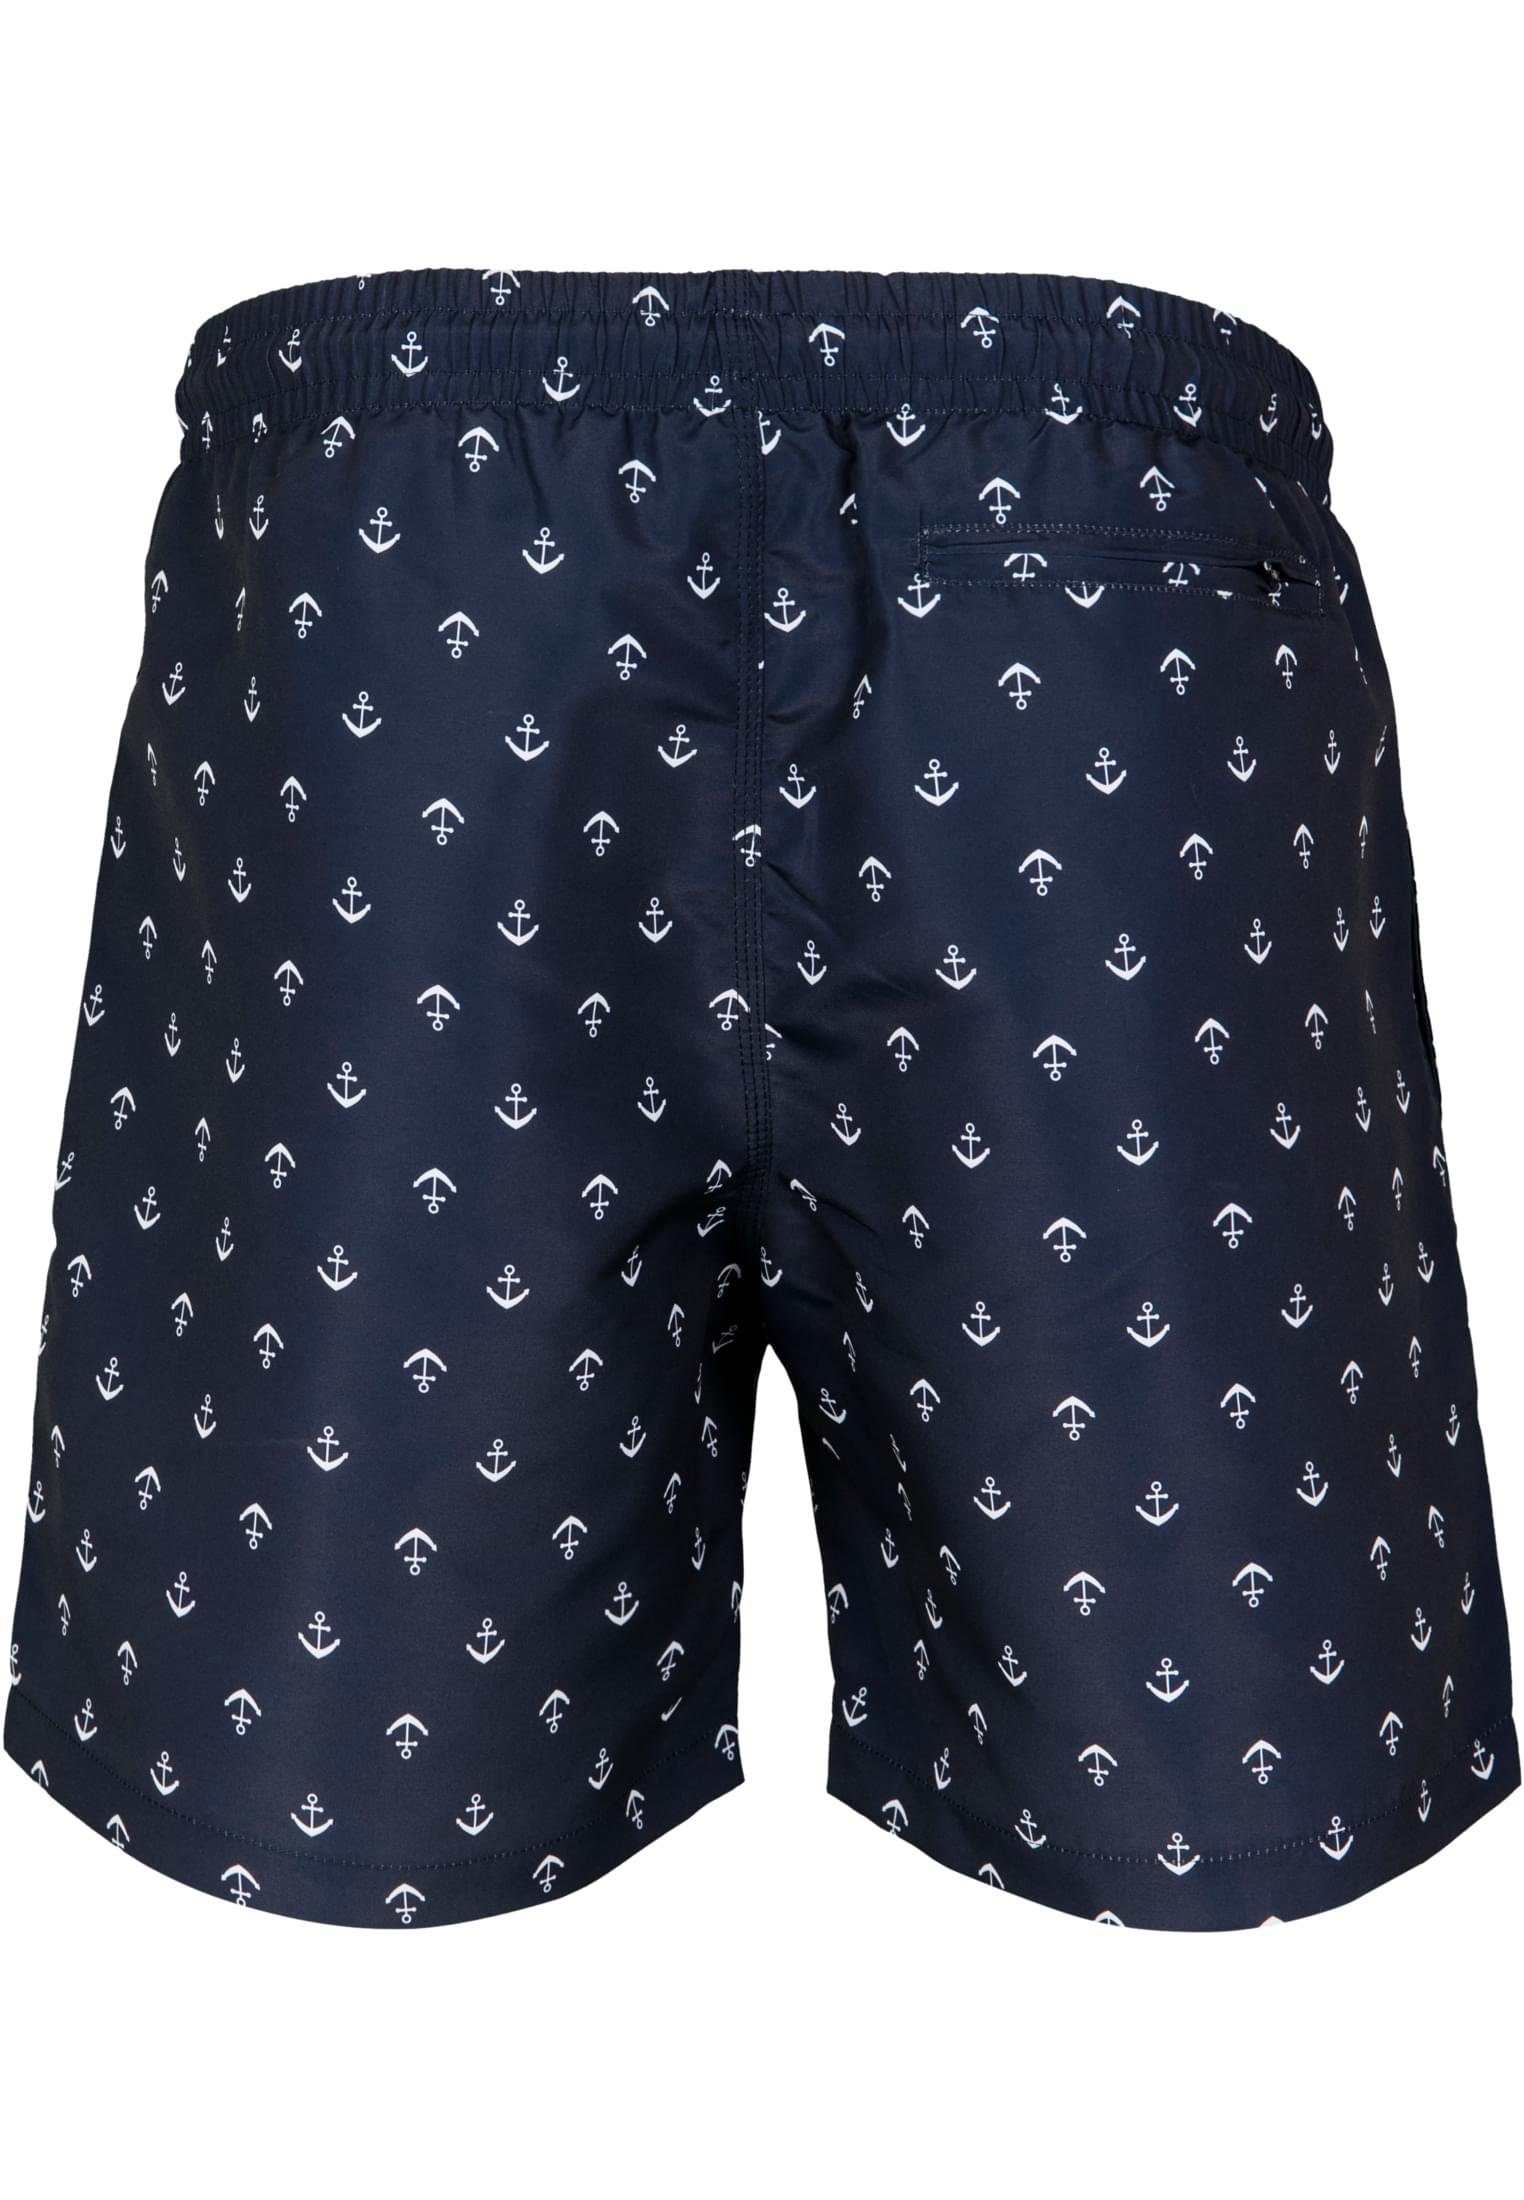 anchor/navy Swim Shorts Badeshorts Pattern Herren URBAN CLASSICS